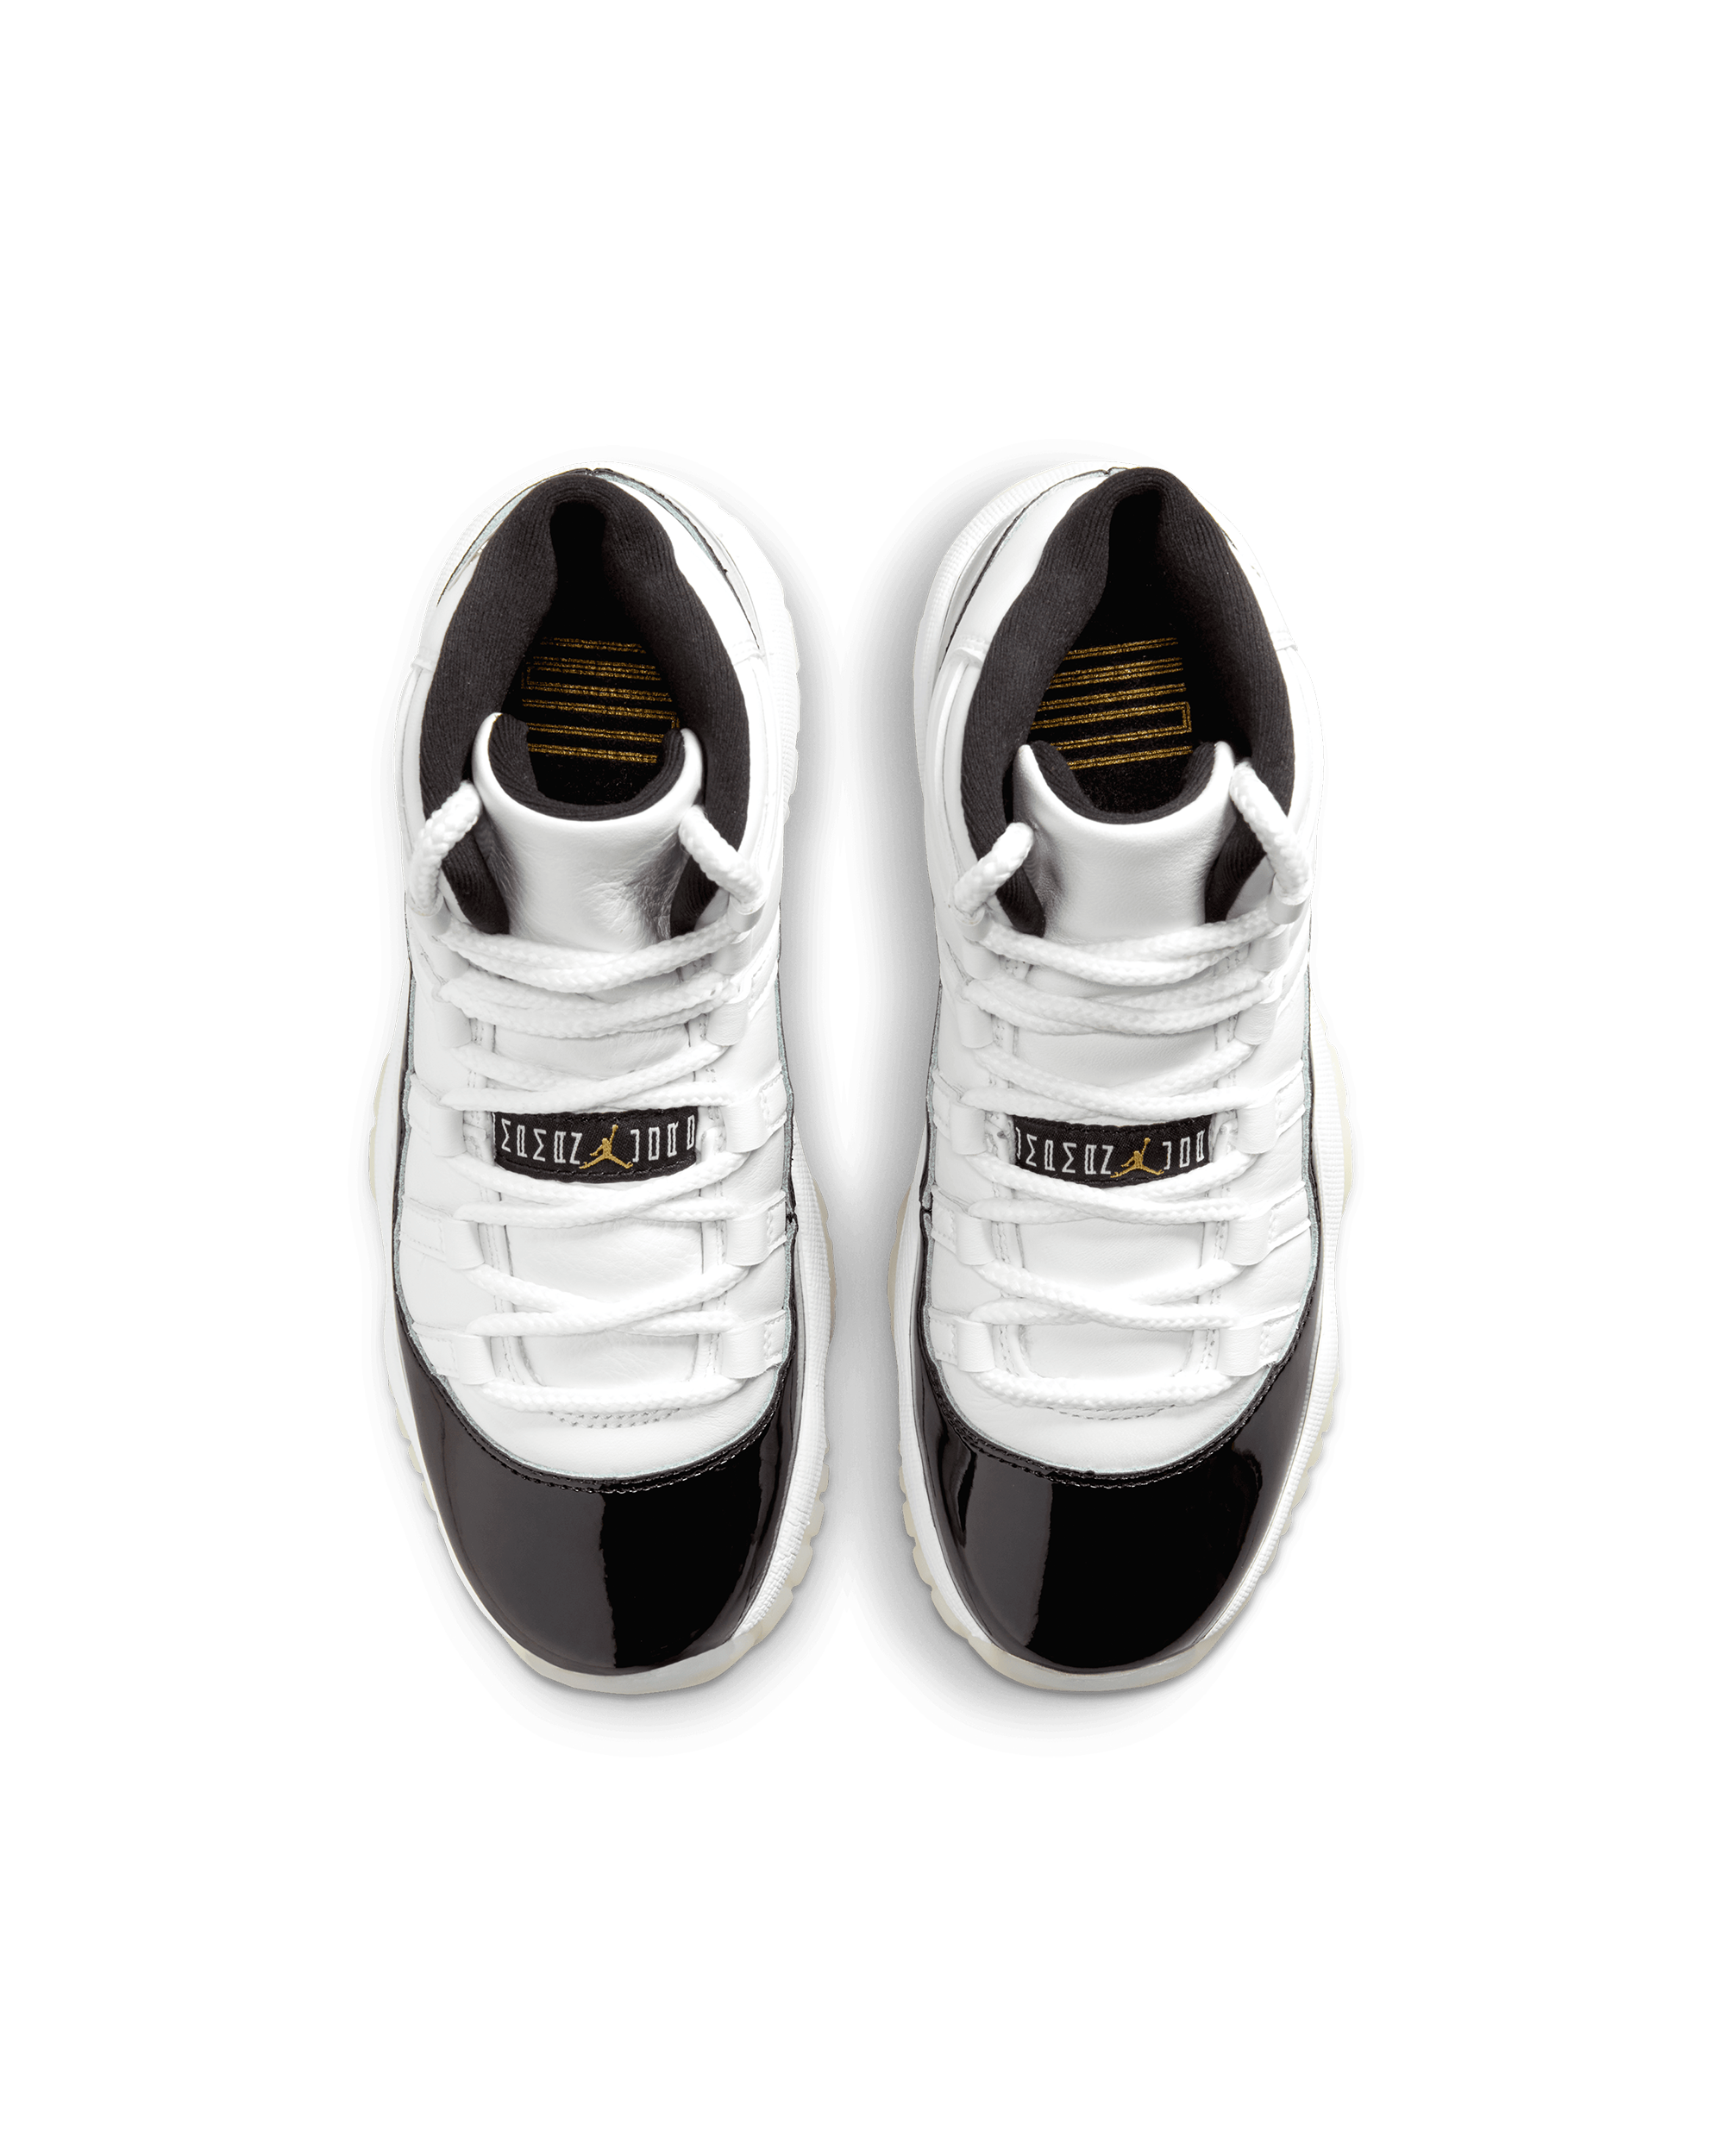 Air Jordan 11 Retro Grade School - White / Metallic Gold-Black